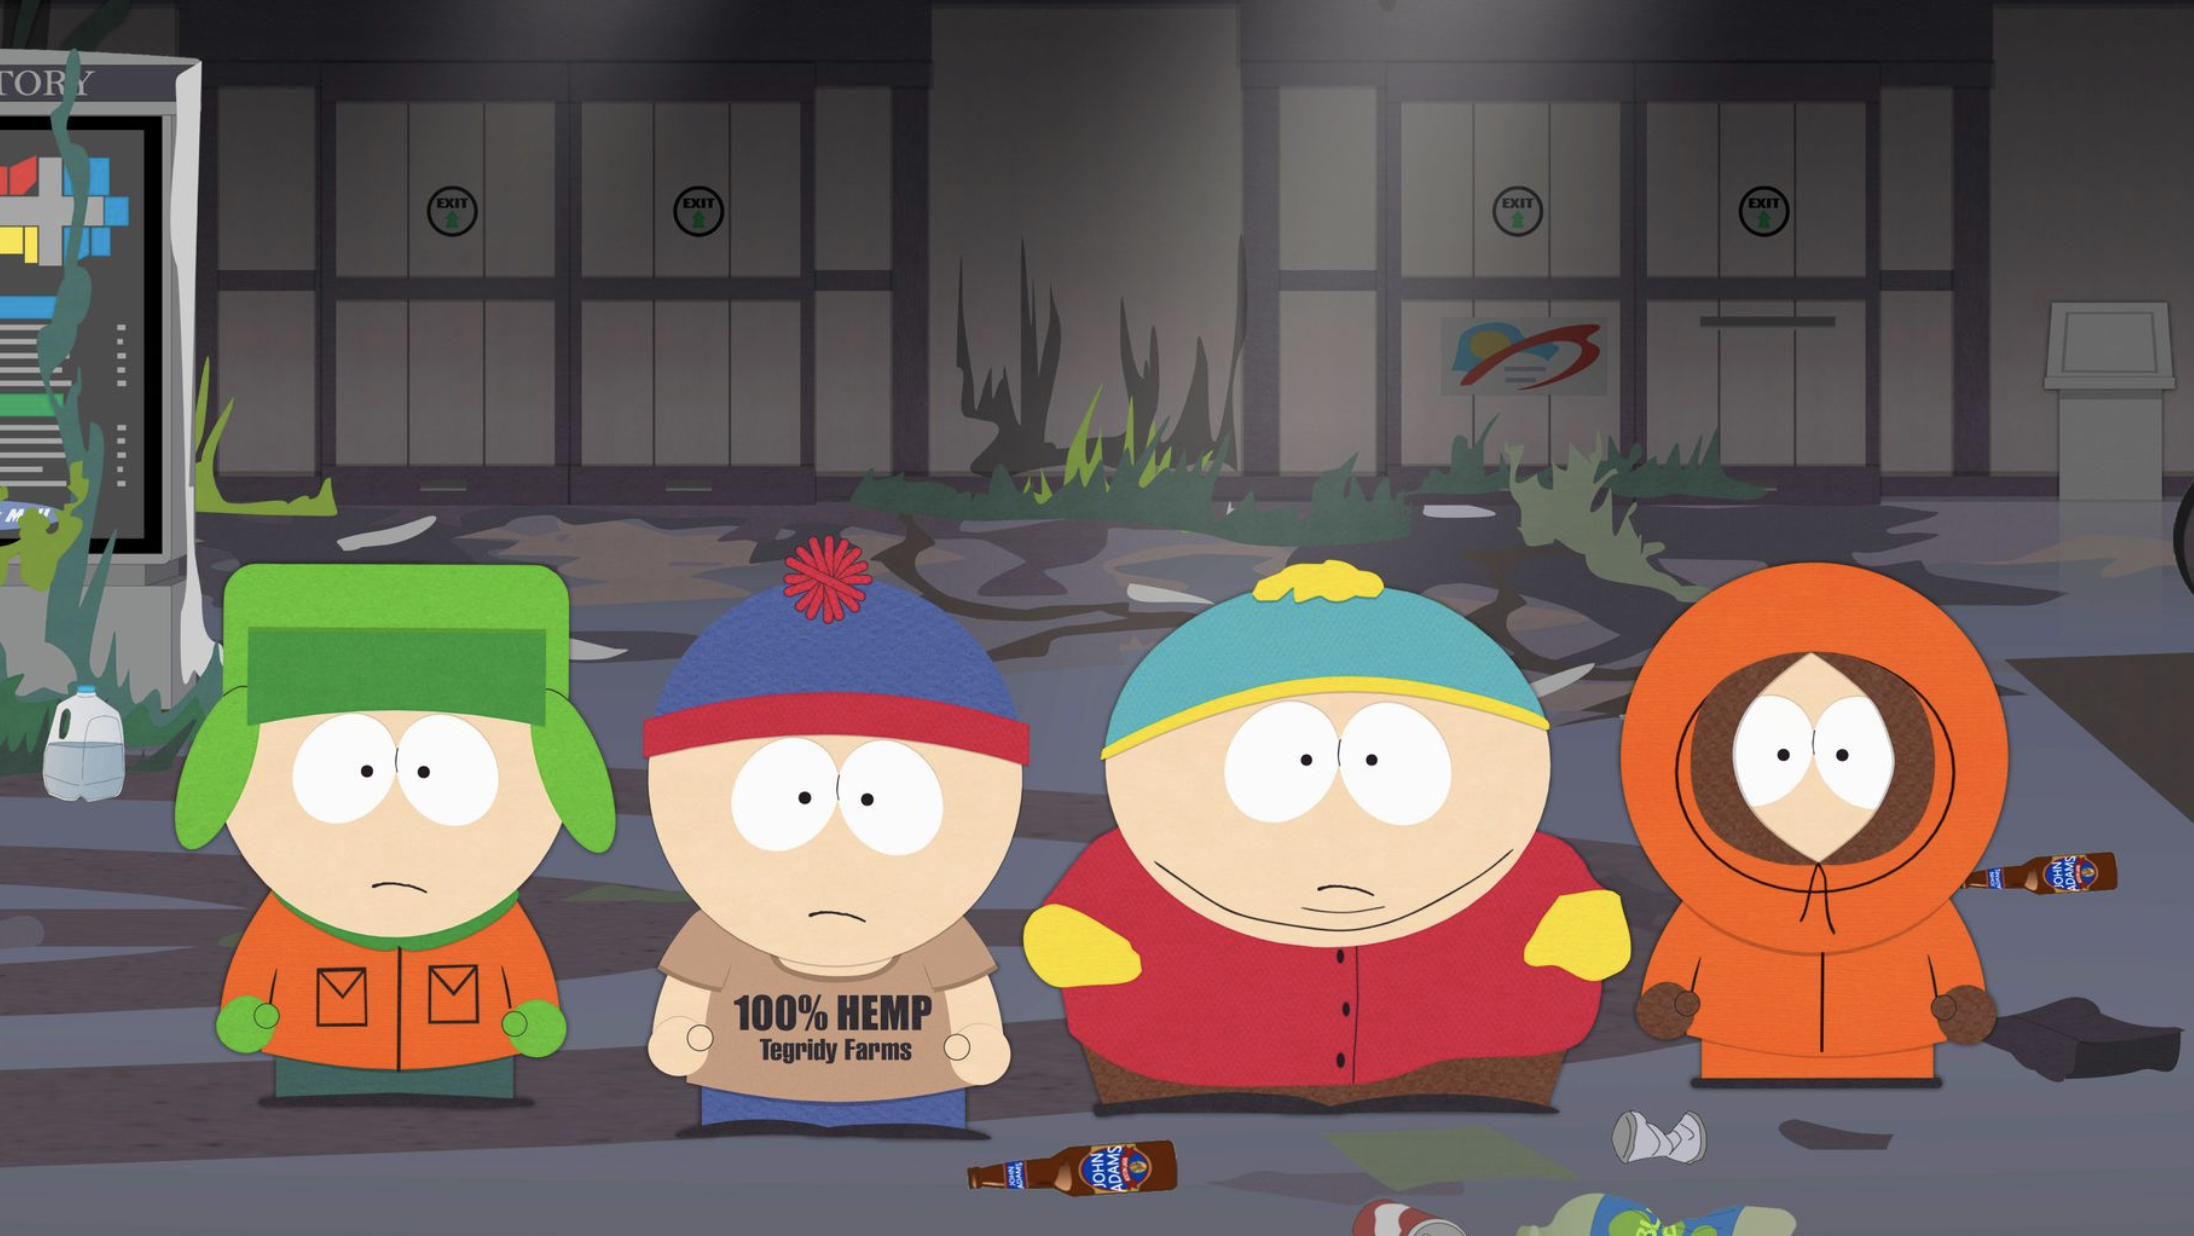 The boys of South Park.